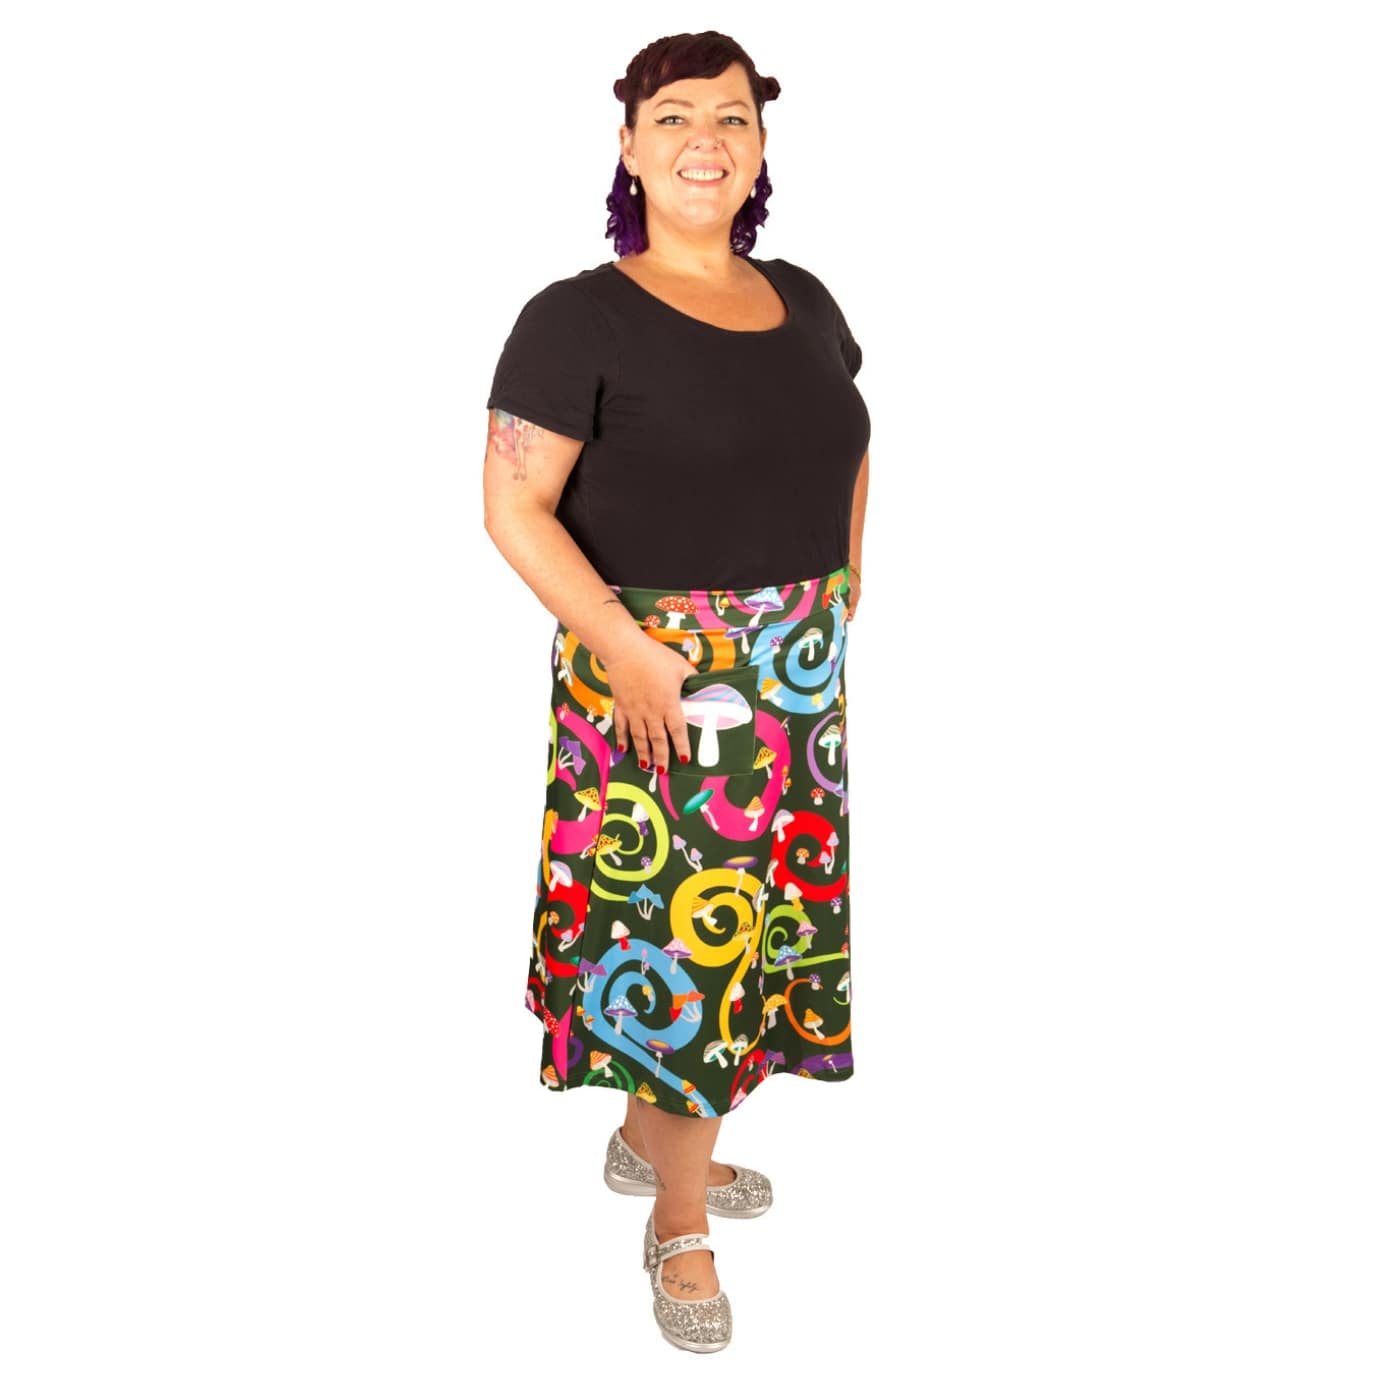 Toadstool Original Skirt by RainbowsAndFairies.com.au (Mushroom - Psychedelic Swirls - Retro - Kitsch - Aline Skirt With Pockets - Vintage Inspired) - SKU: CL_OSKRT_TOADS_ORG - Pic-08